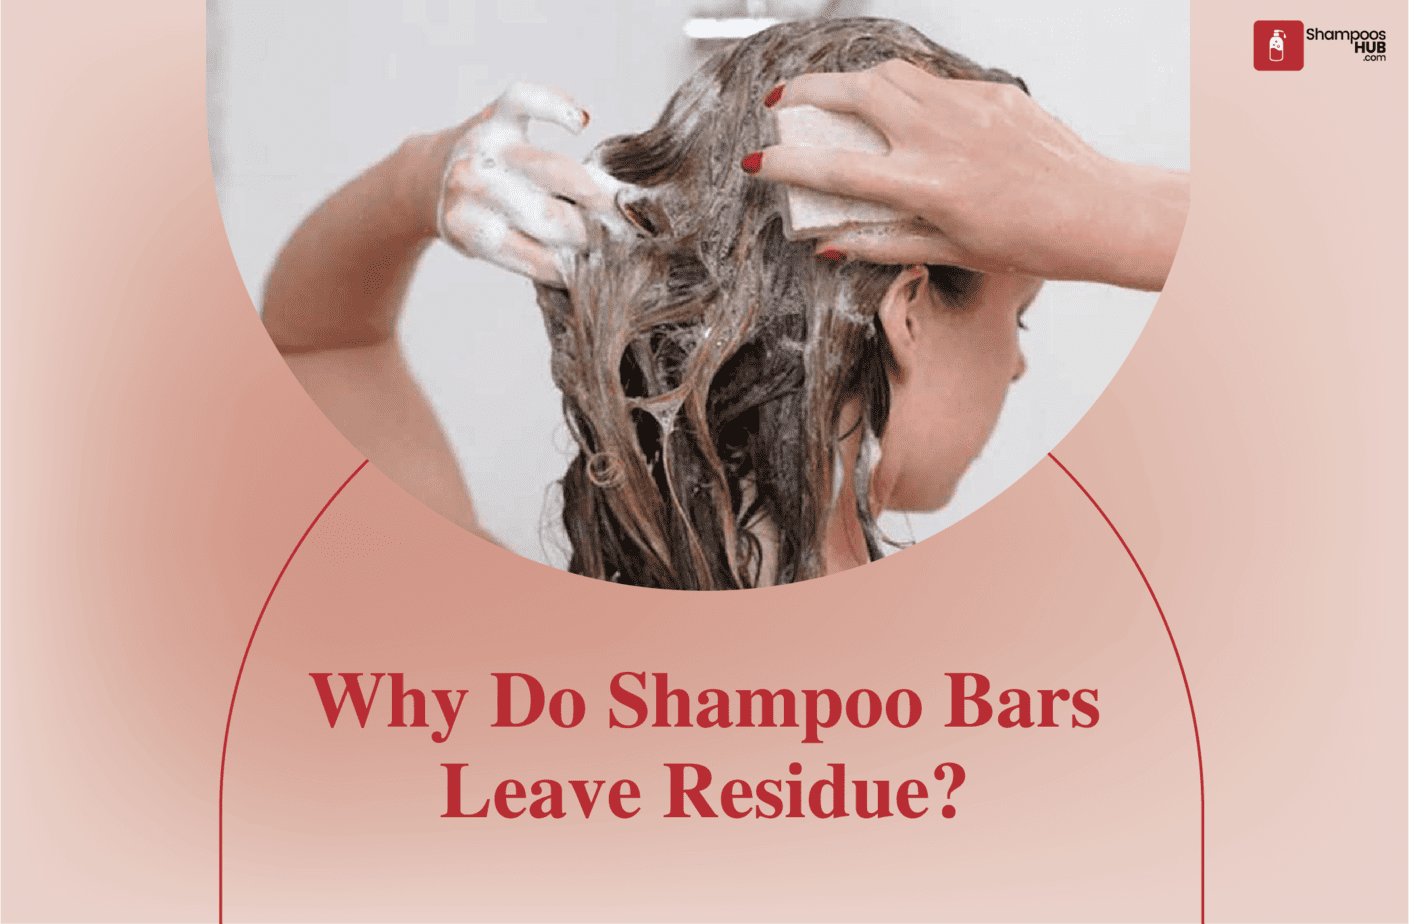 Why Do Shampoo Bars Leave Residue?